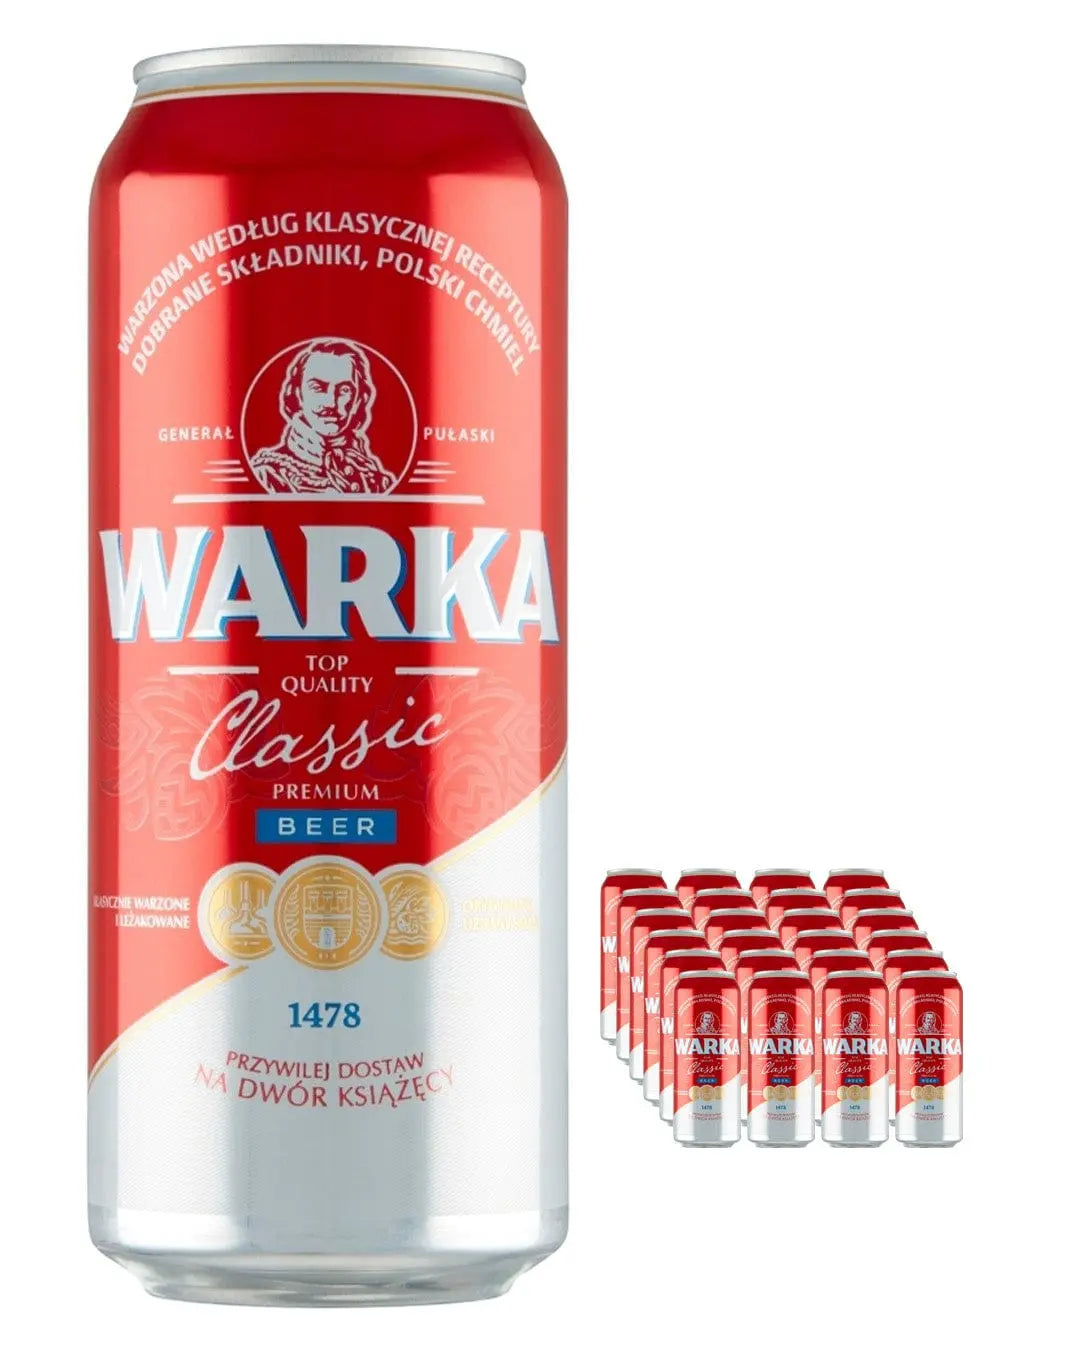 Warka Classic Polish Premium Lager Beer Multipack, 24 x 500 ml Beer